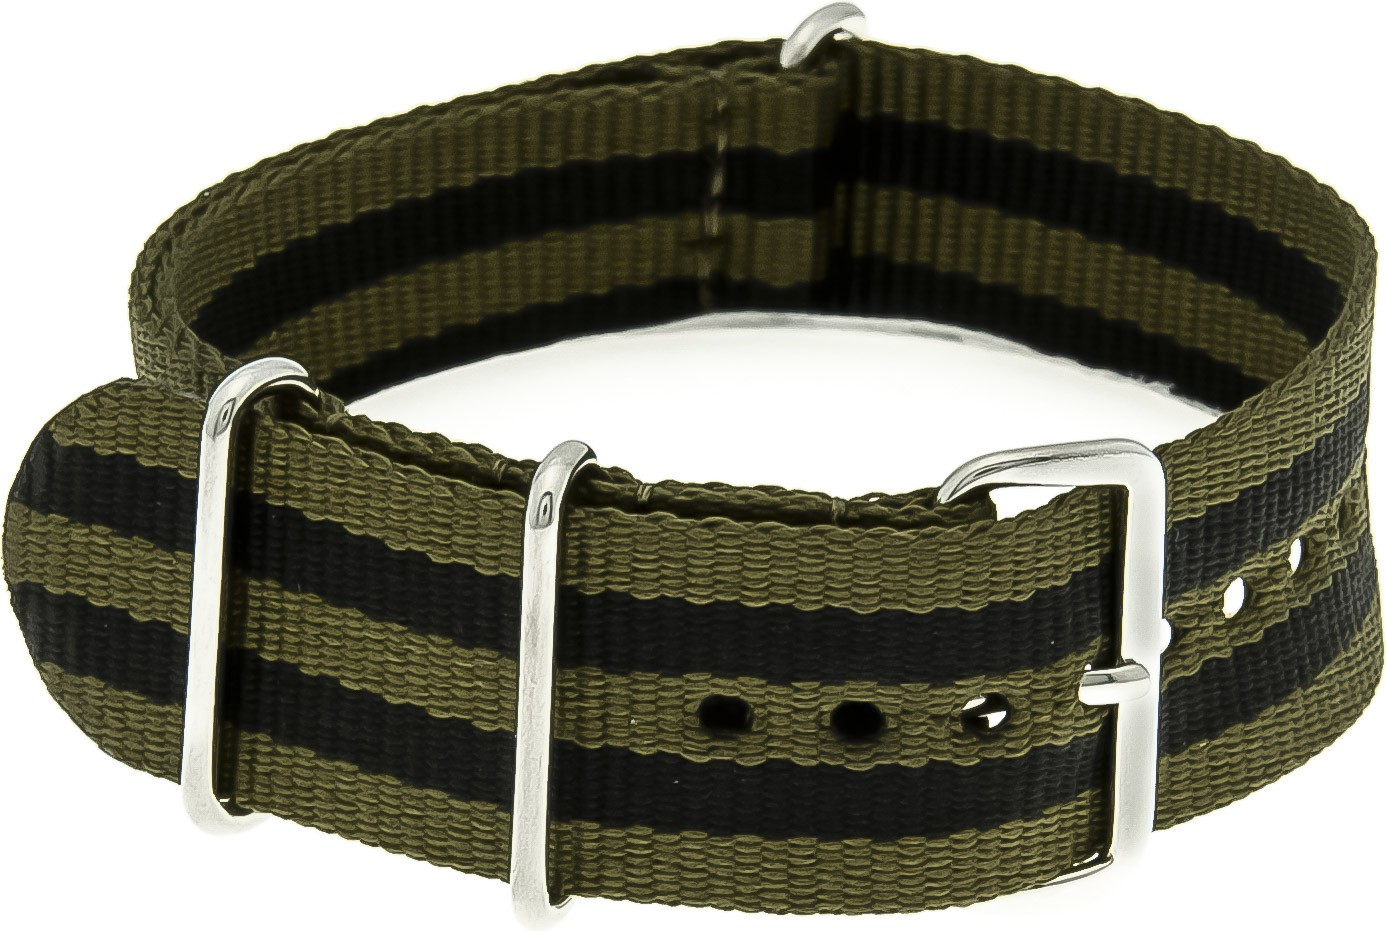  Nylon Watchband nylon military darkgreen-black 